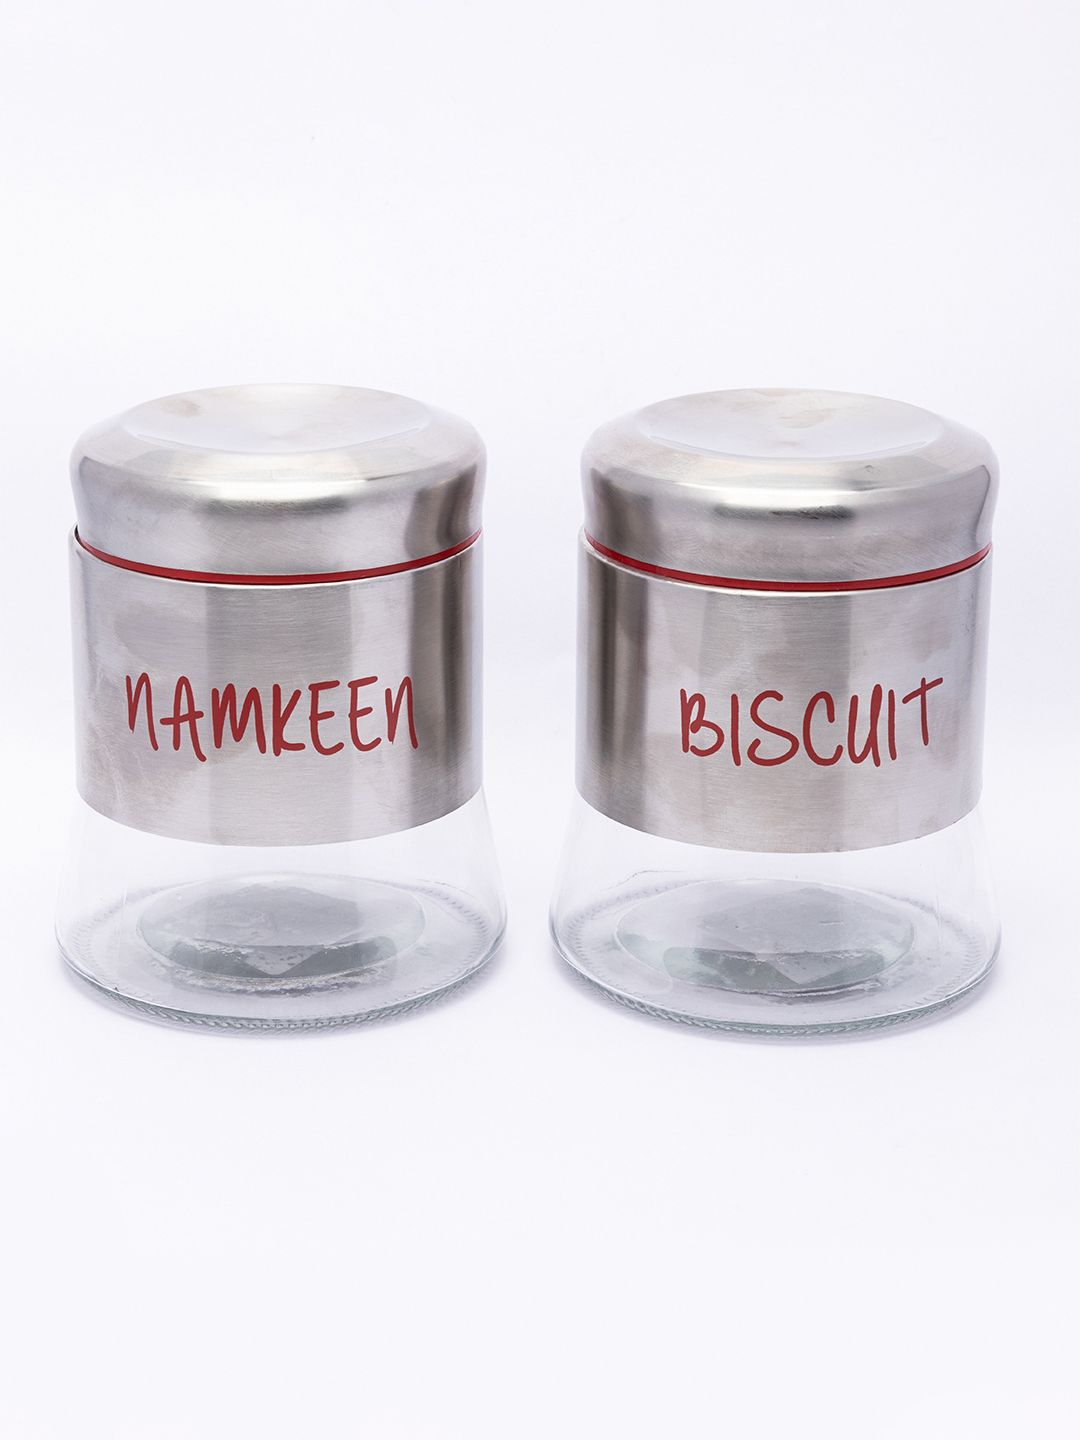 MARKET99 Silver Toned Biscuit & Namkeen Jar Set Price in India